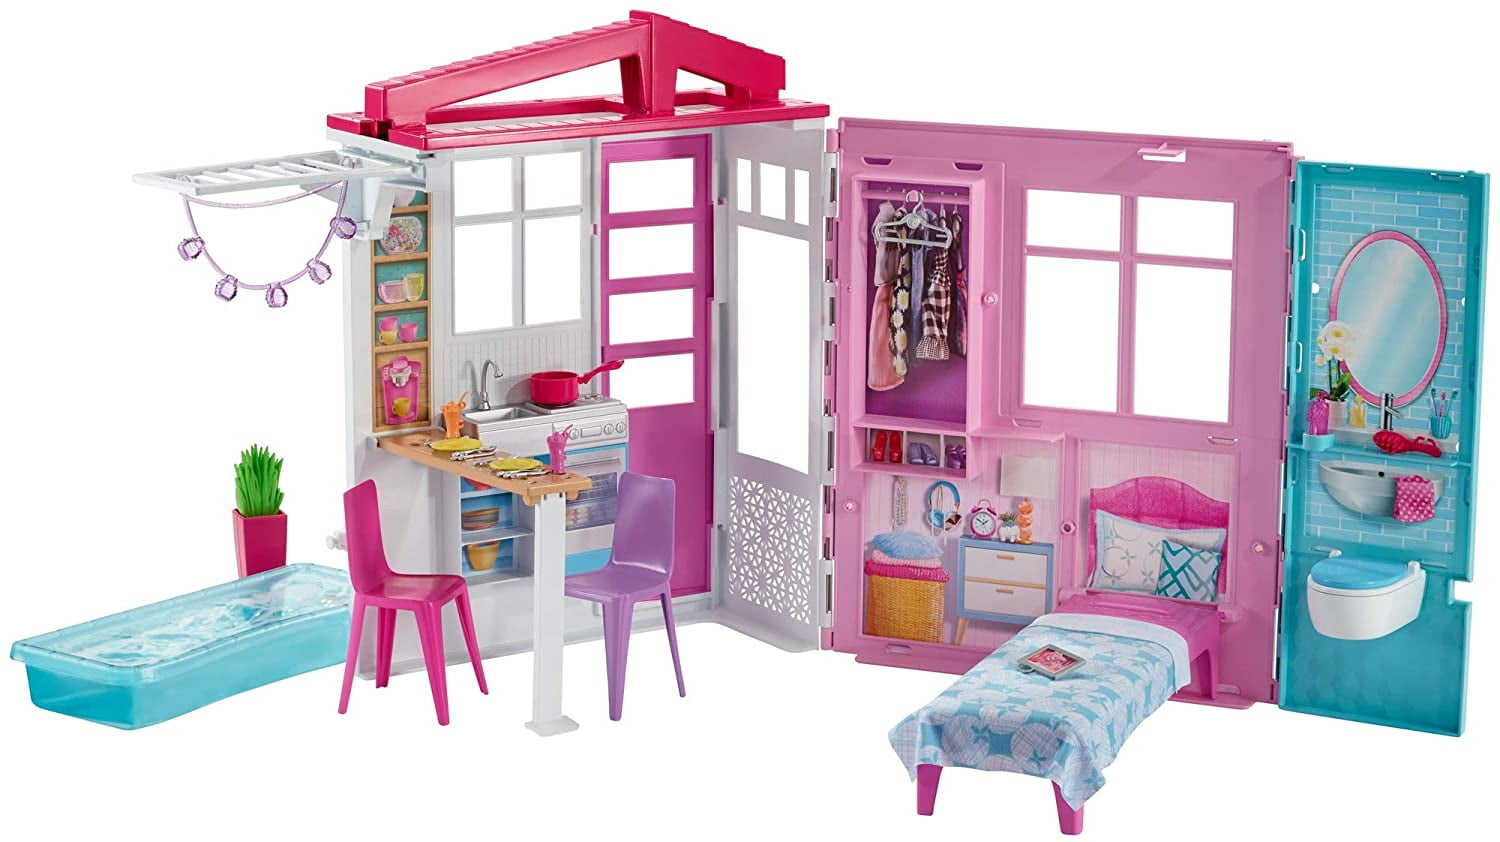 Barbie Doll House Furniture Accessoires Piscine 1 histoire Playhouse Toy Set FXG55 